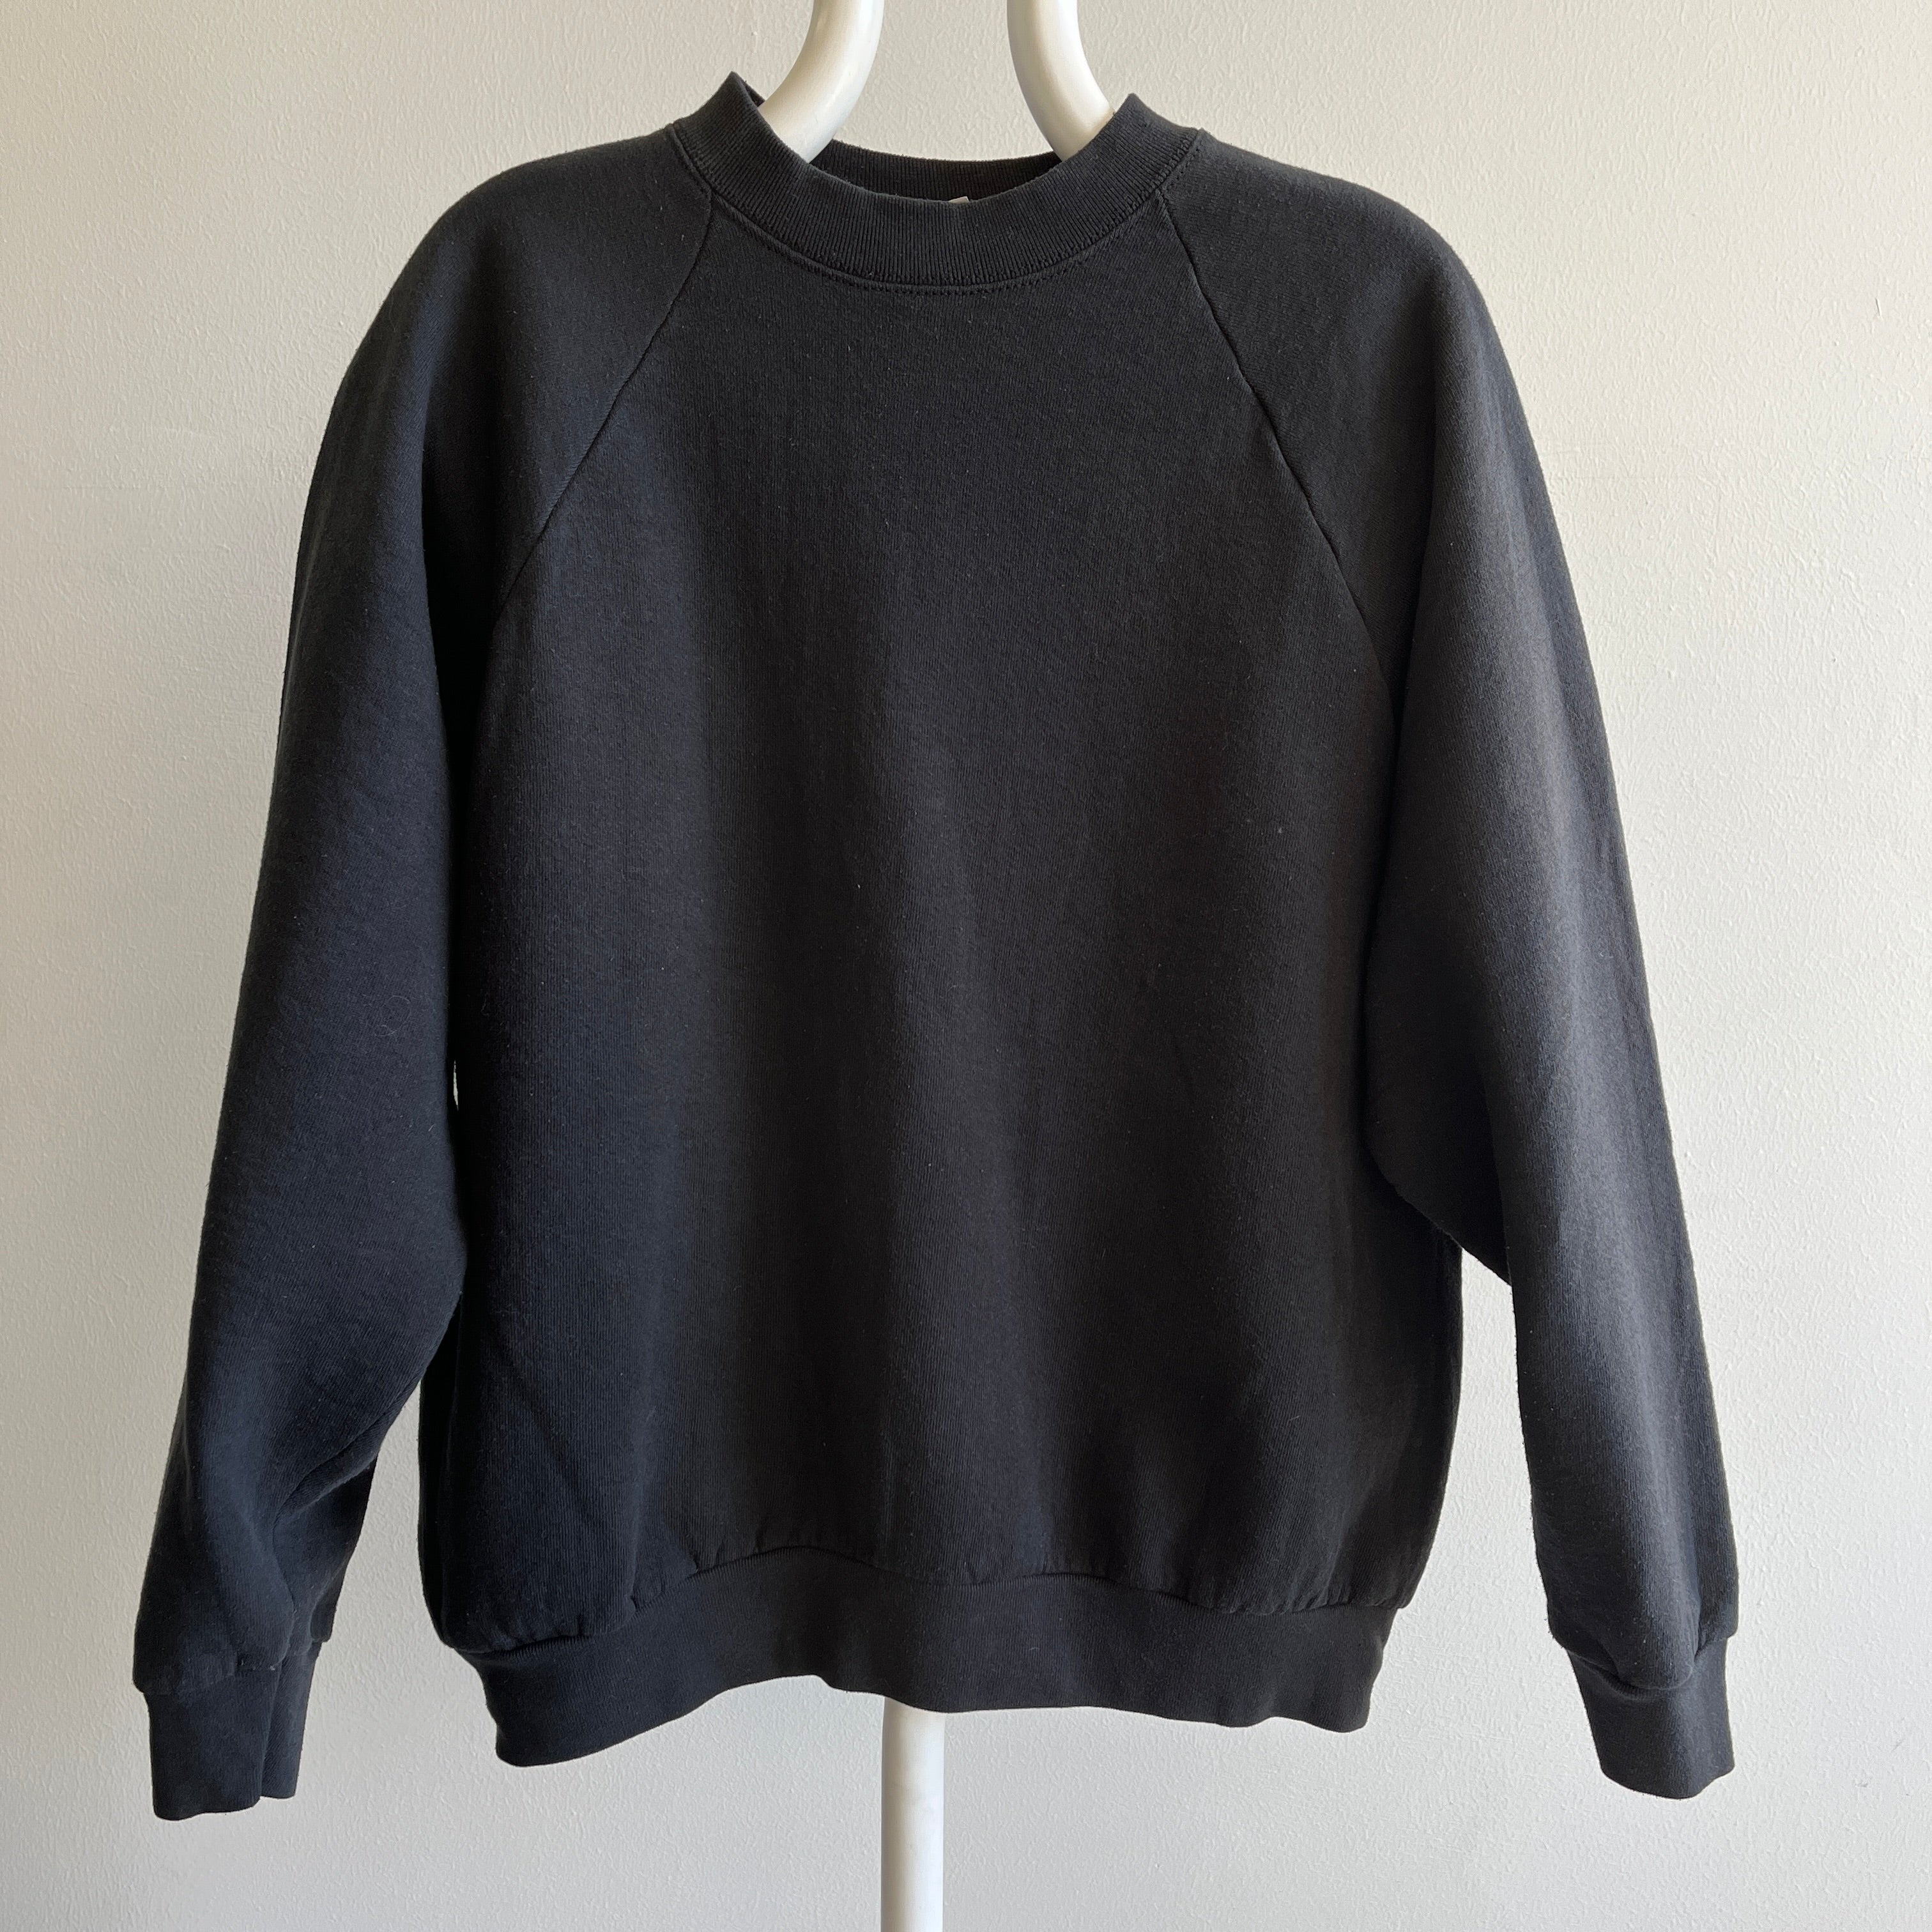 1990s Medium Weight Blank Black High Crew Sweatshirt by FOTL